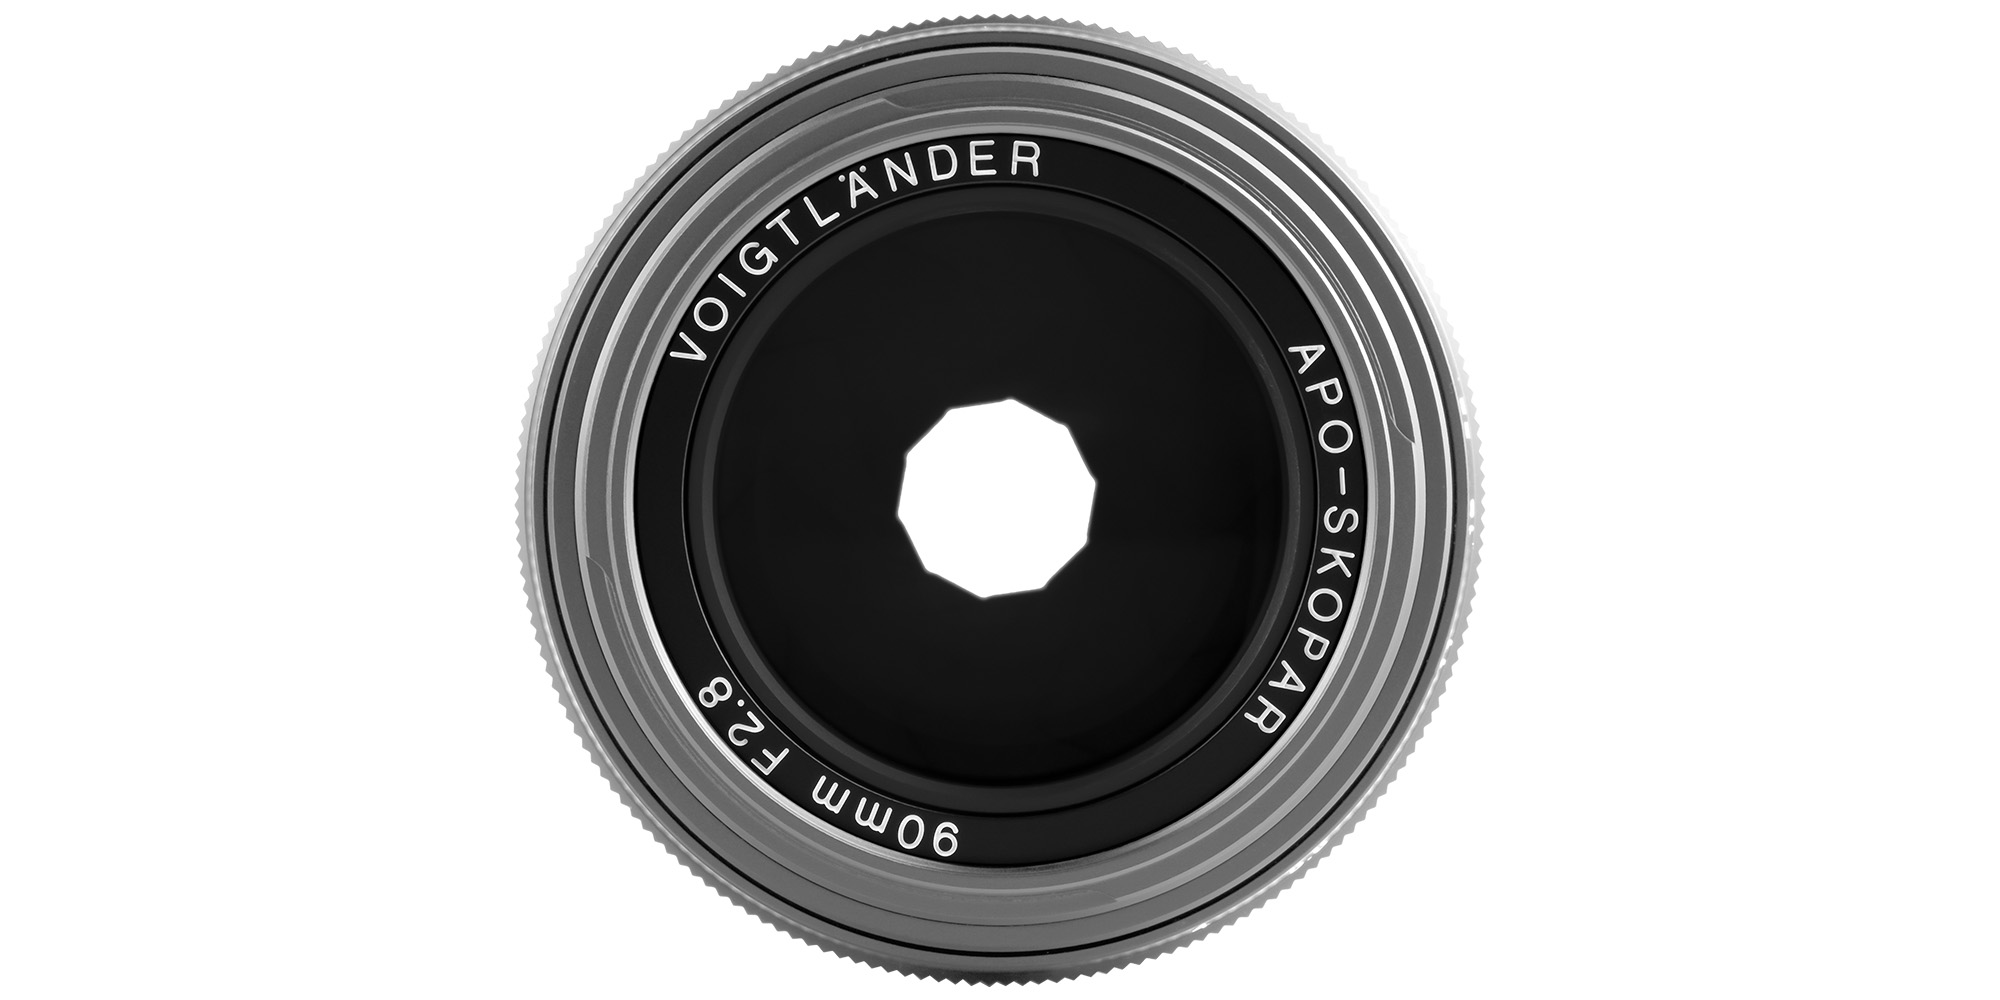 Voigtlander APO Skopar 90mm f/2.8 lens for Leica M - Silver - Smooth control of light